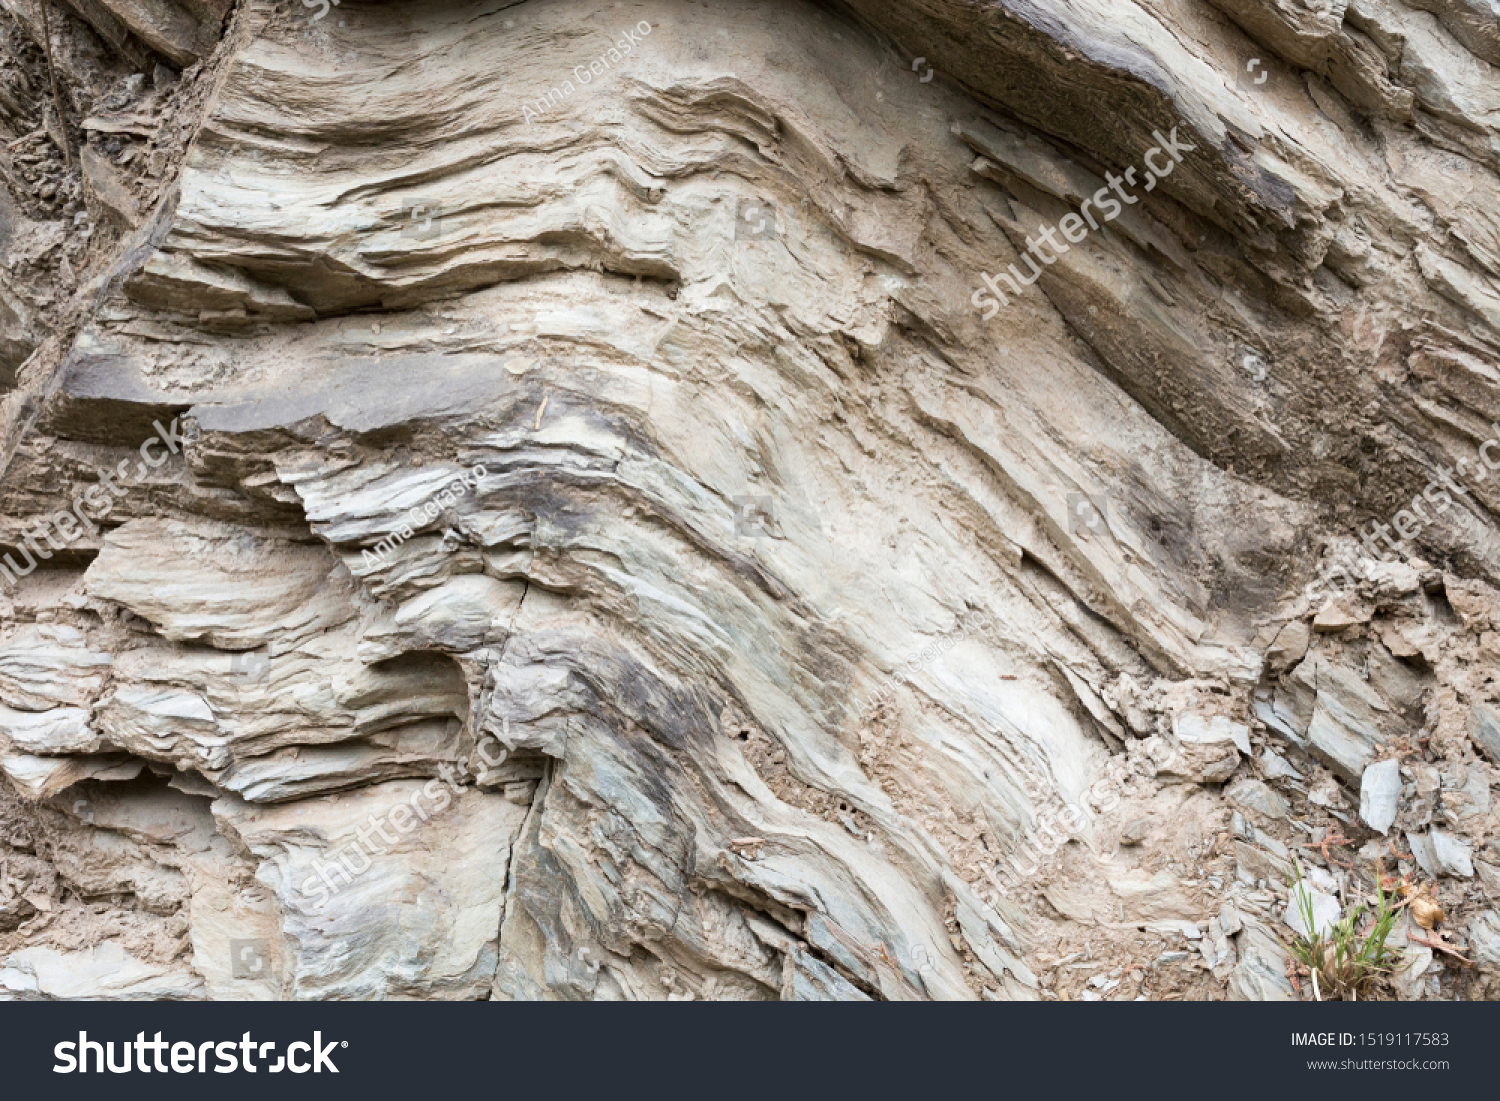 Beige layered rocks pattern, close-up #1519117583